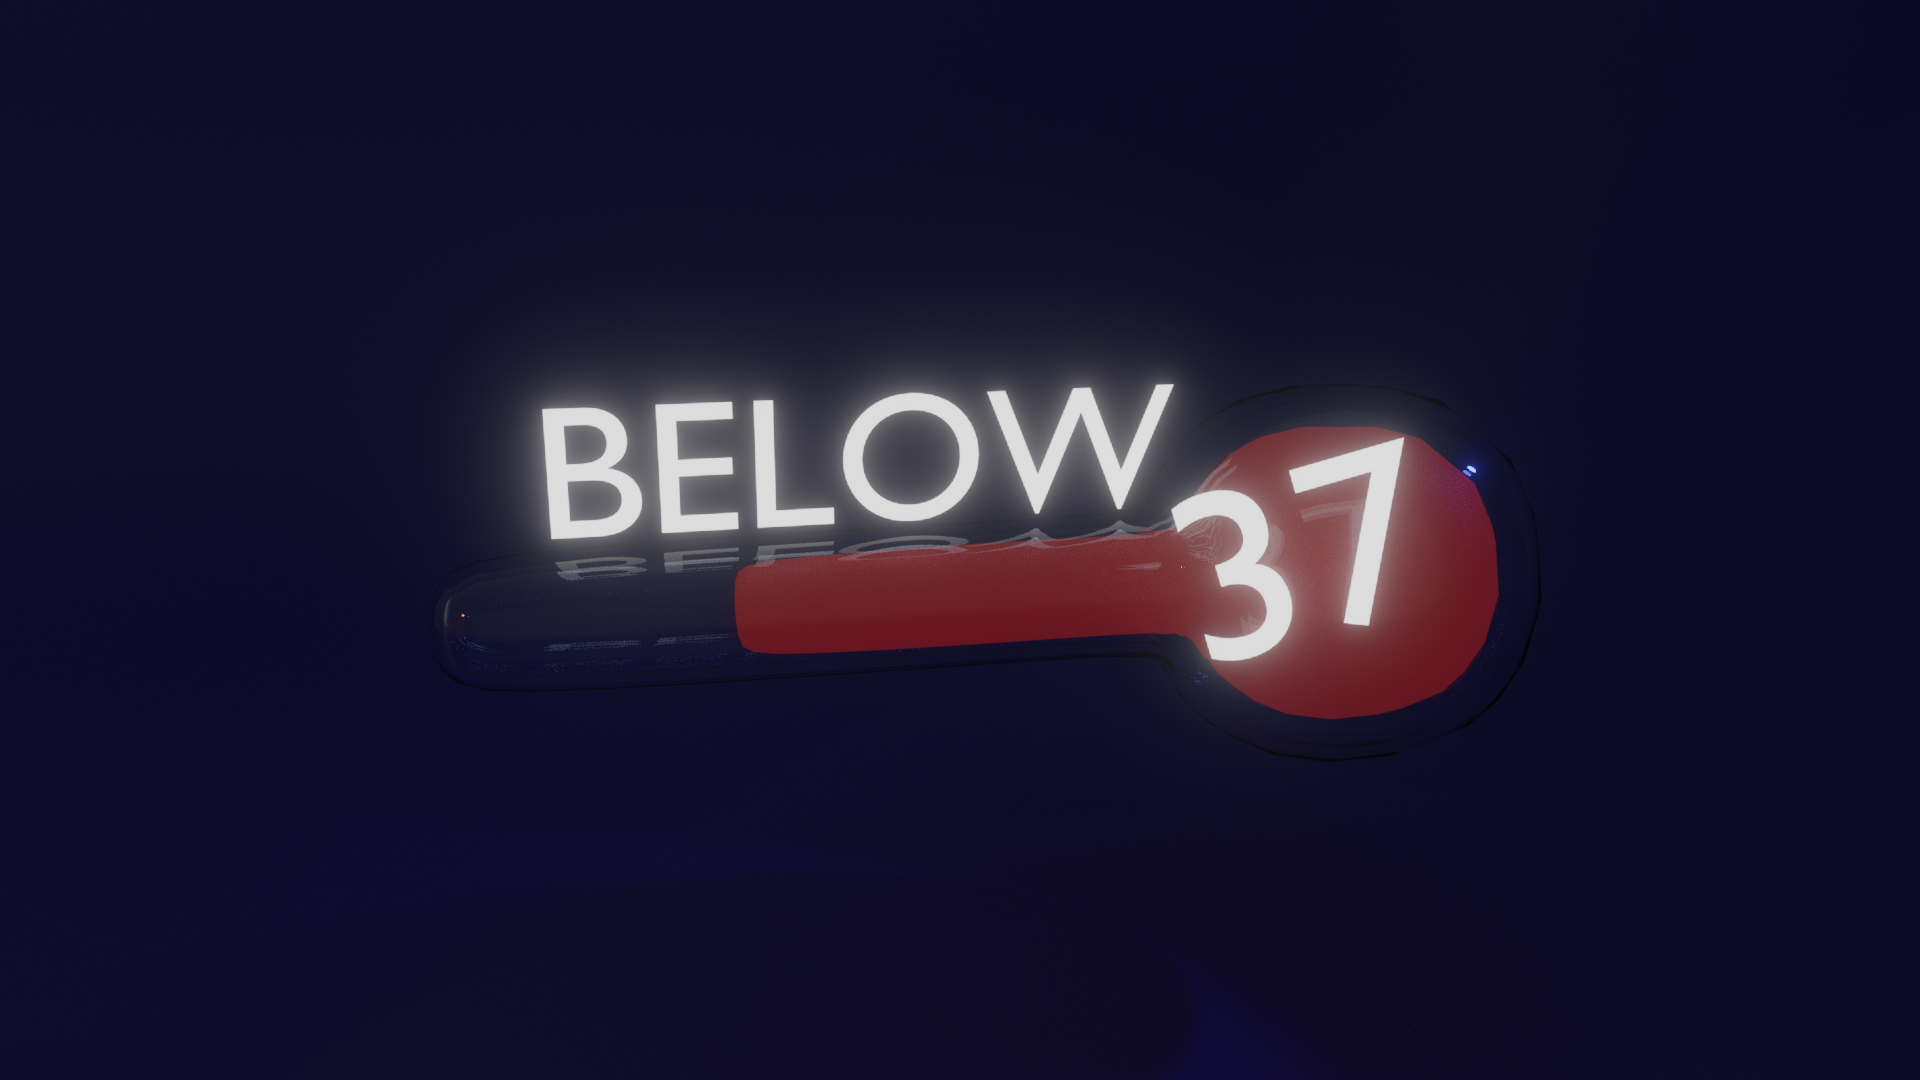 Below 37